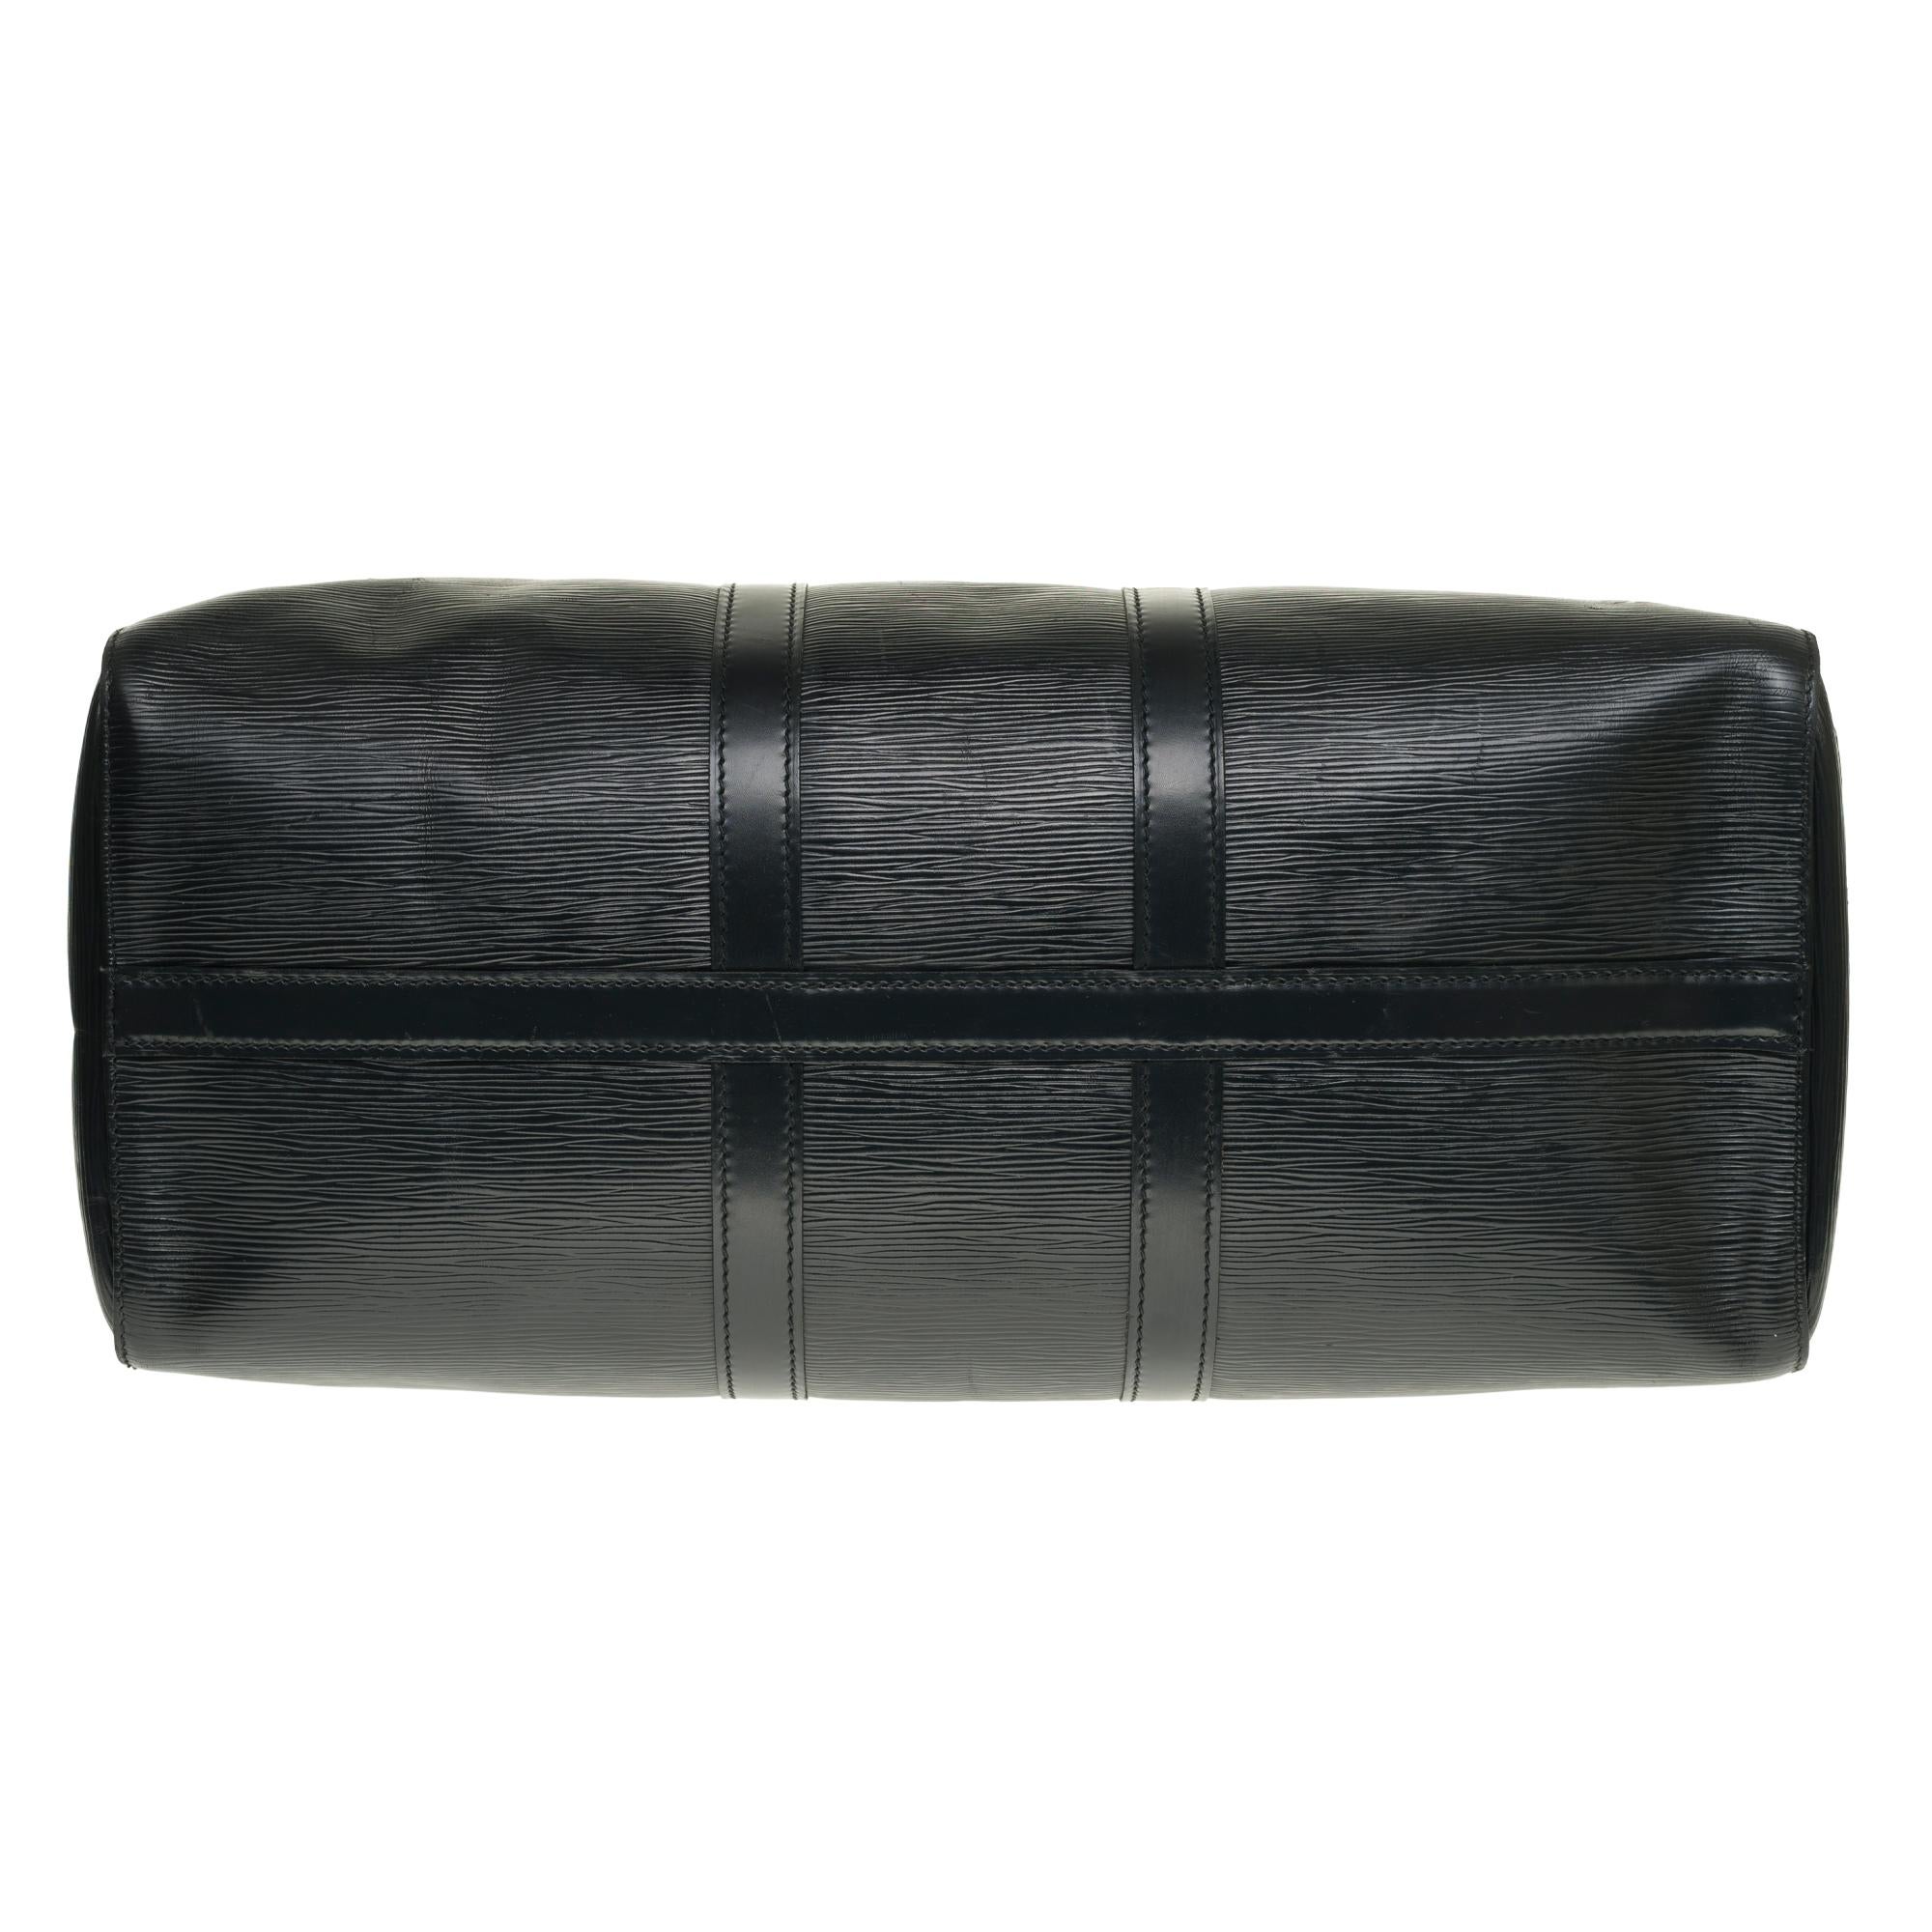 Louis Vuitton Keepall 45 Travel bag in black épi leather 3